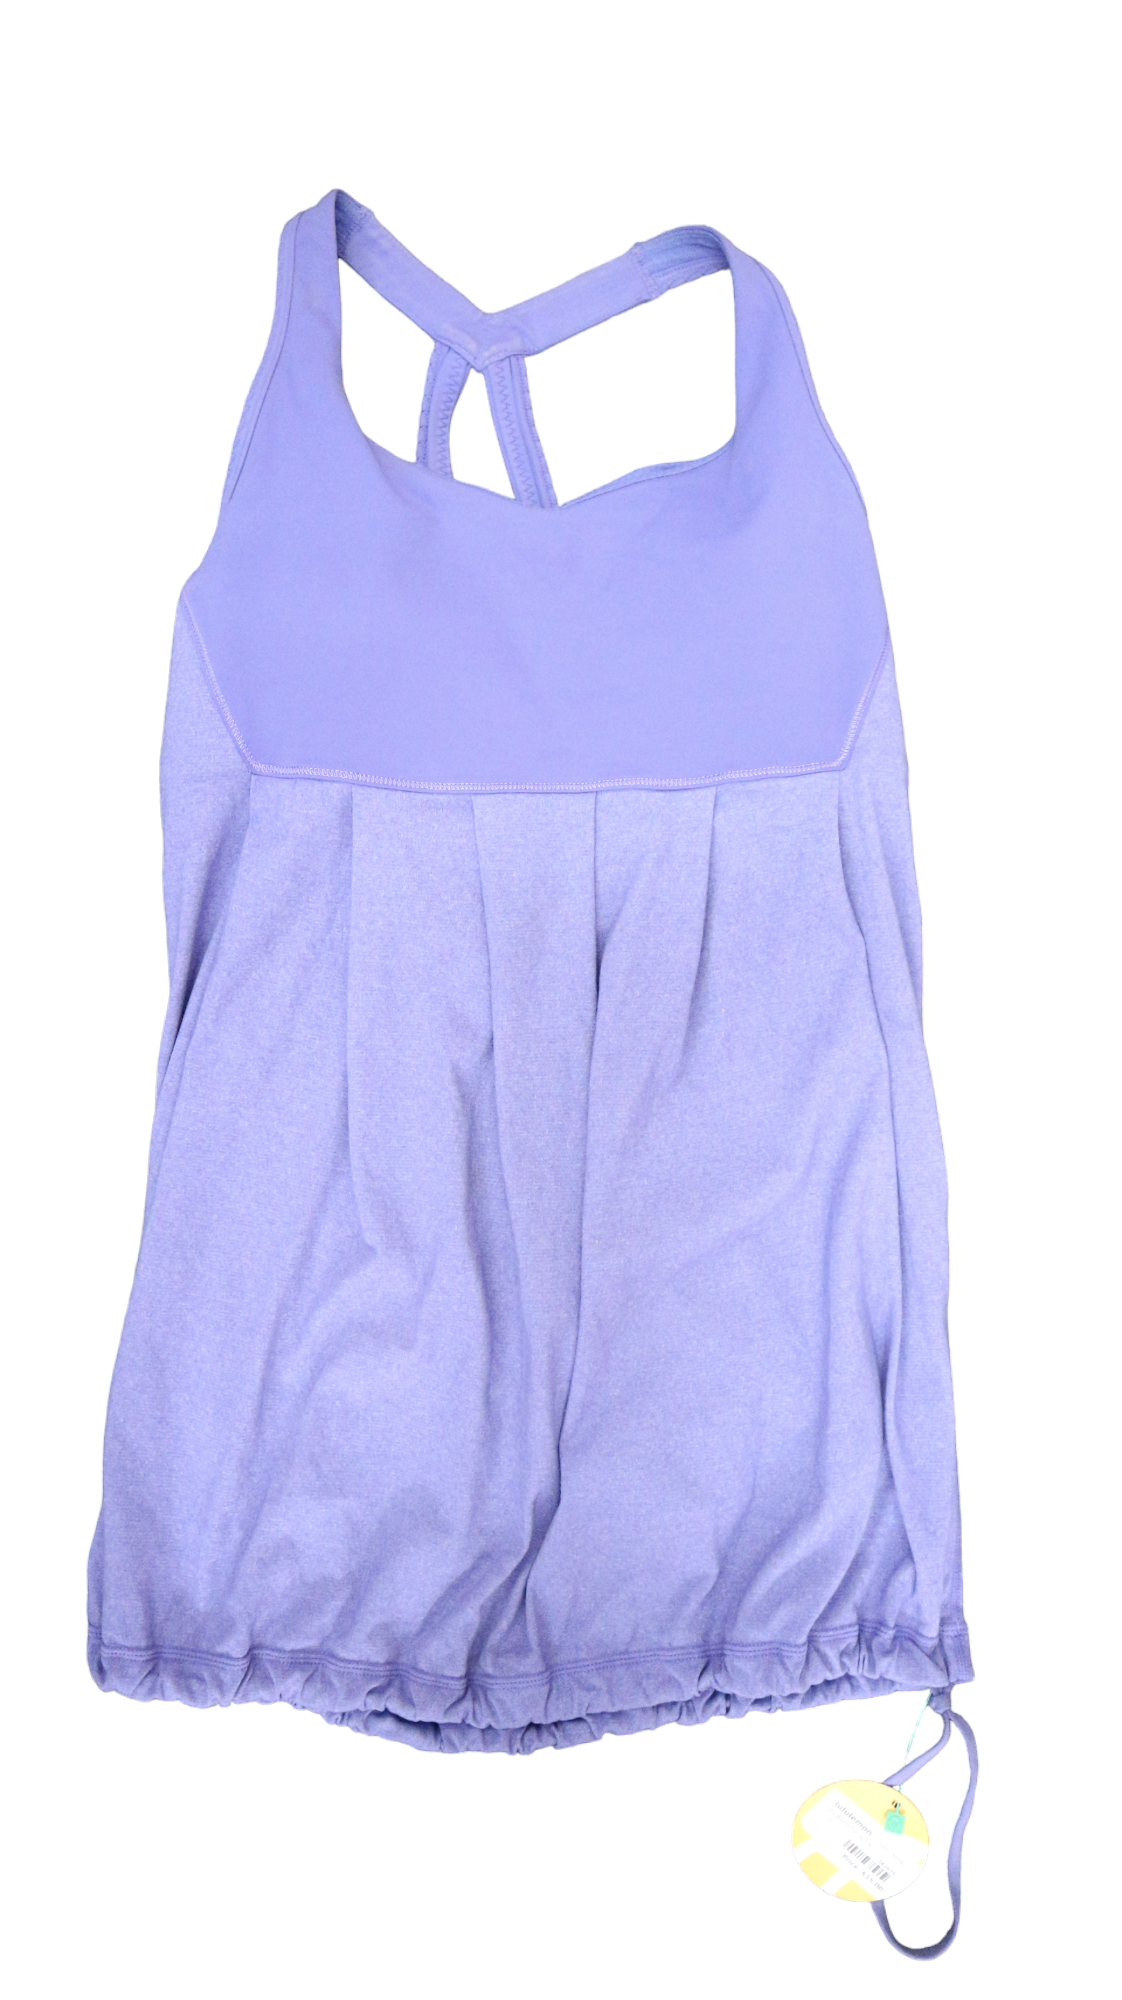 Lululemon maternity activewear, Small/10 – Use-Ta!